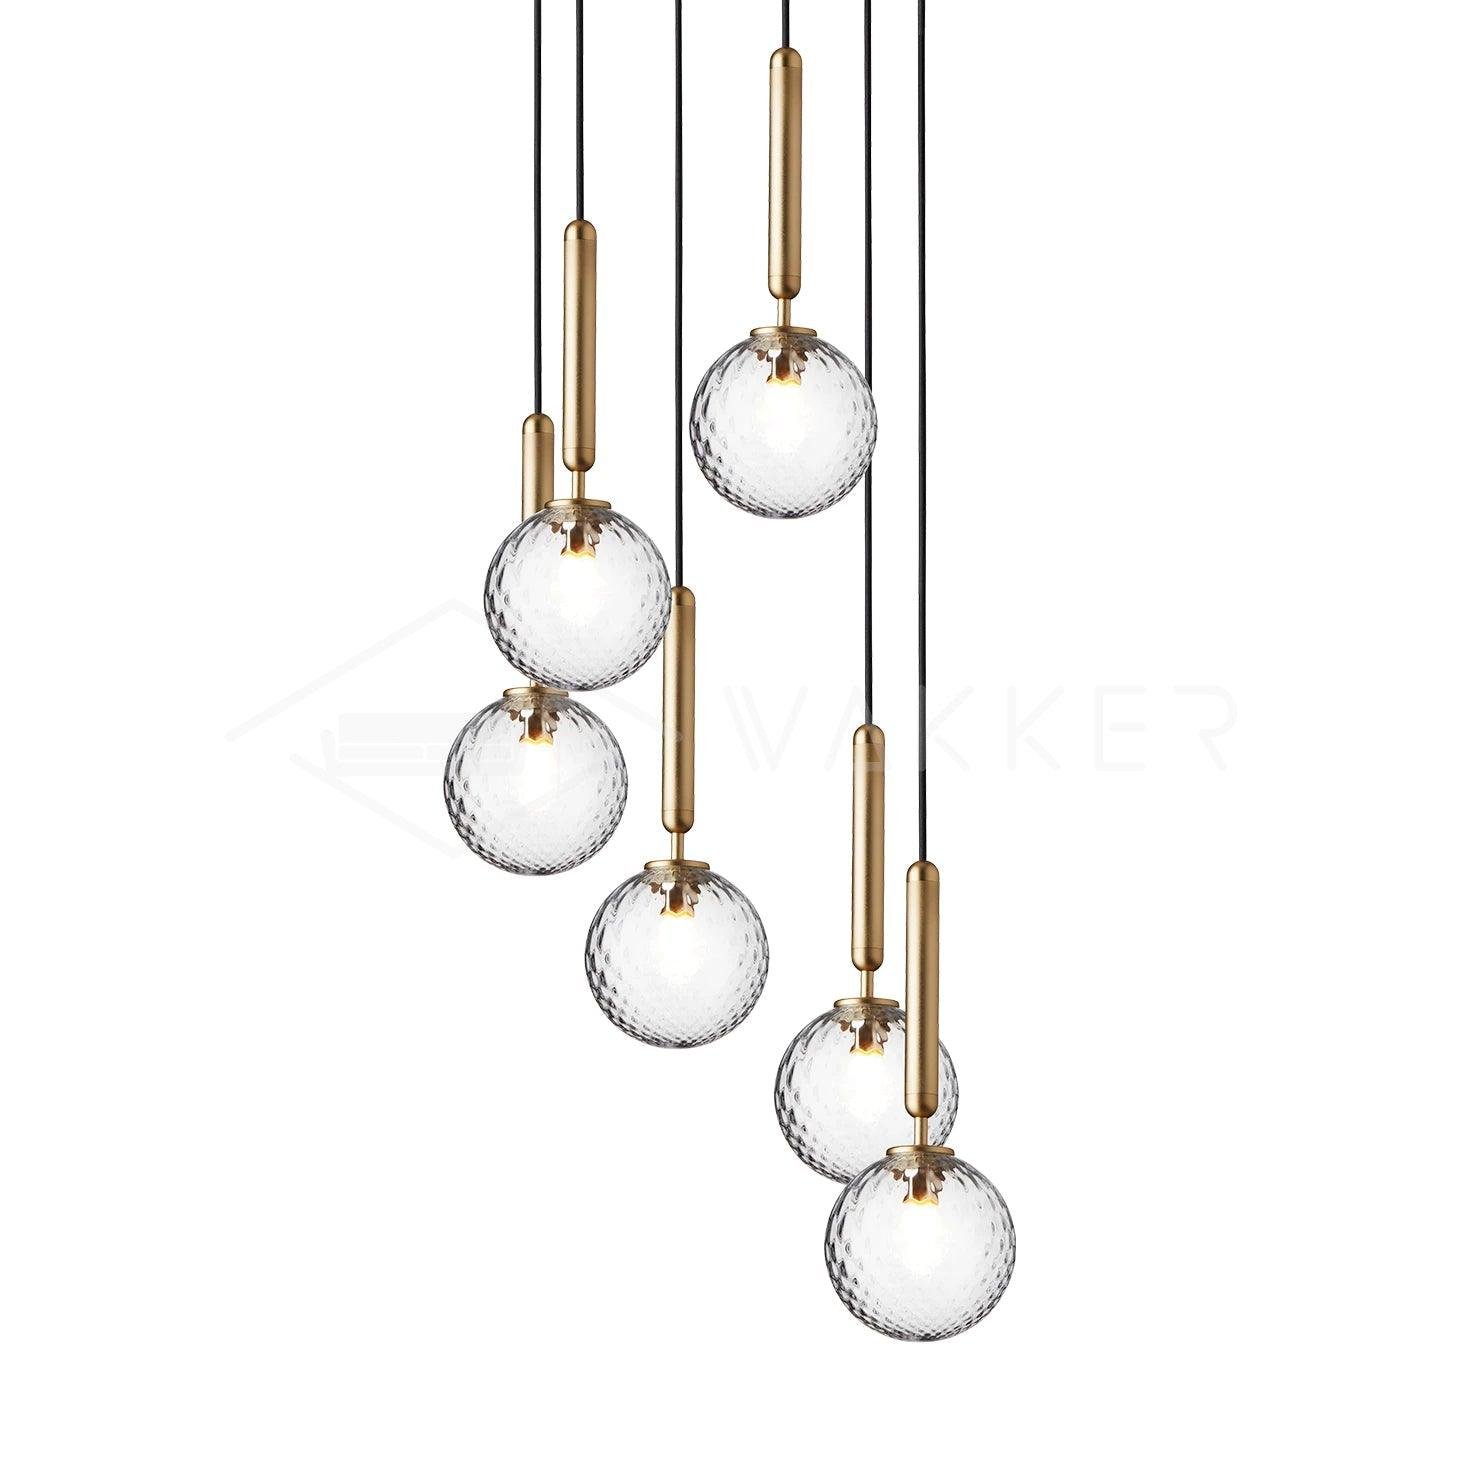 Brass Pendant Light with 6 Heads (11.8" Diameter x 59" Height, 30cm Diameter x 150cm Height, Brass Finish, Clear Glass)